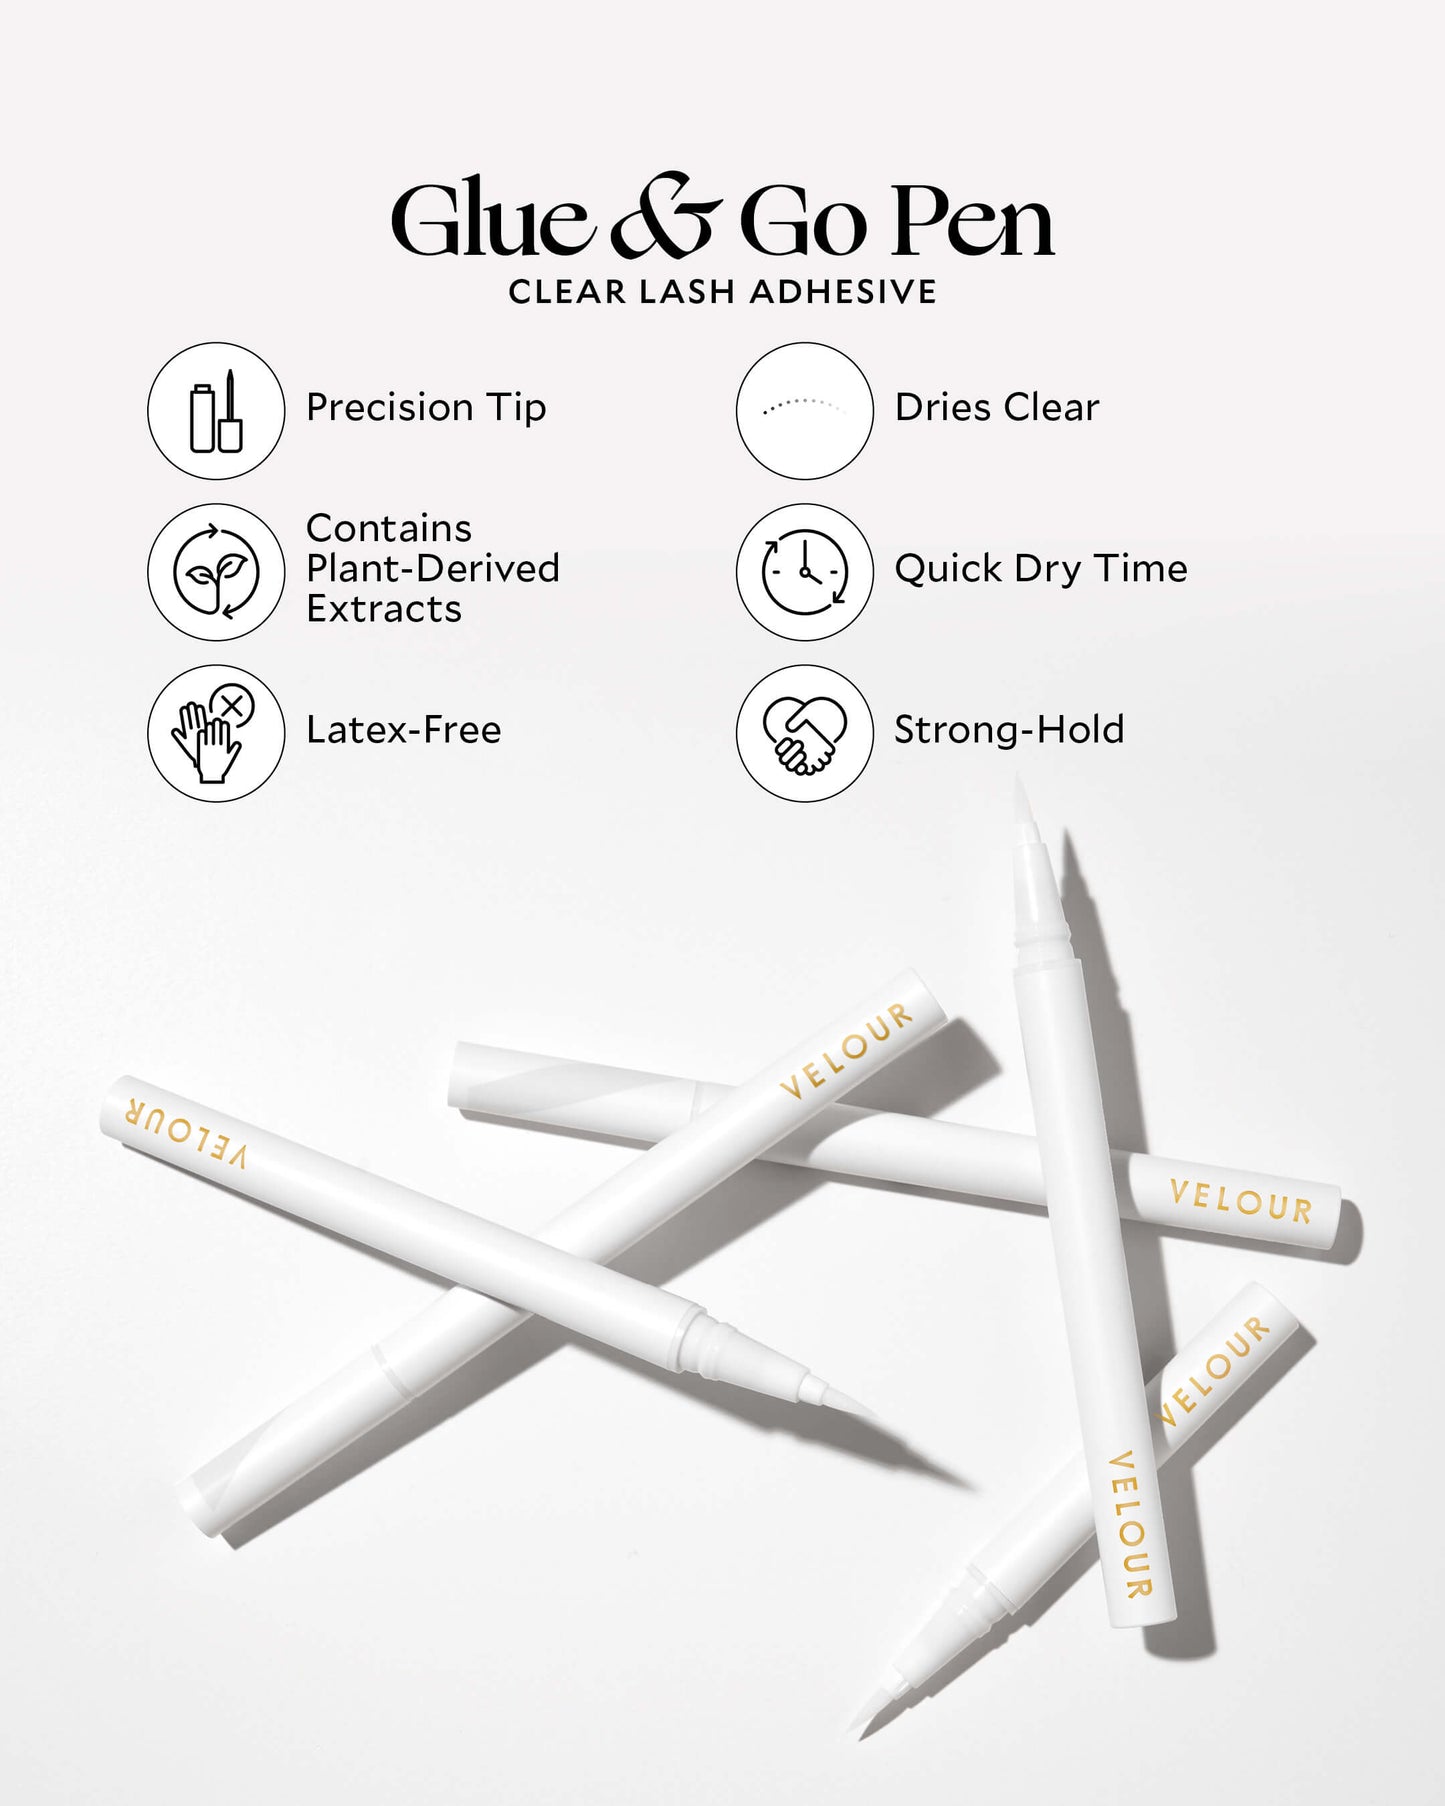 Glue & Go Pen